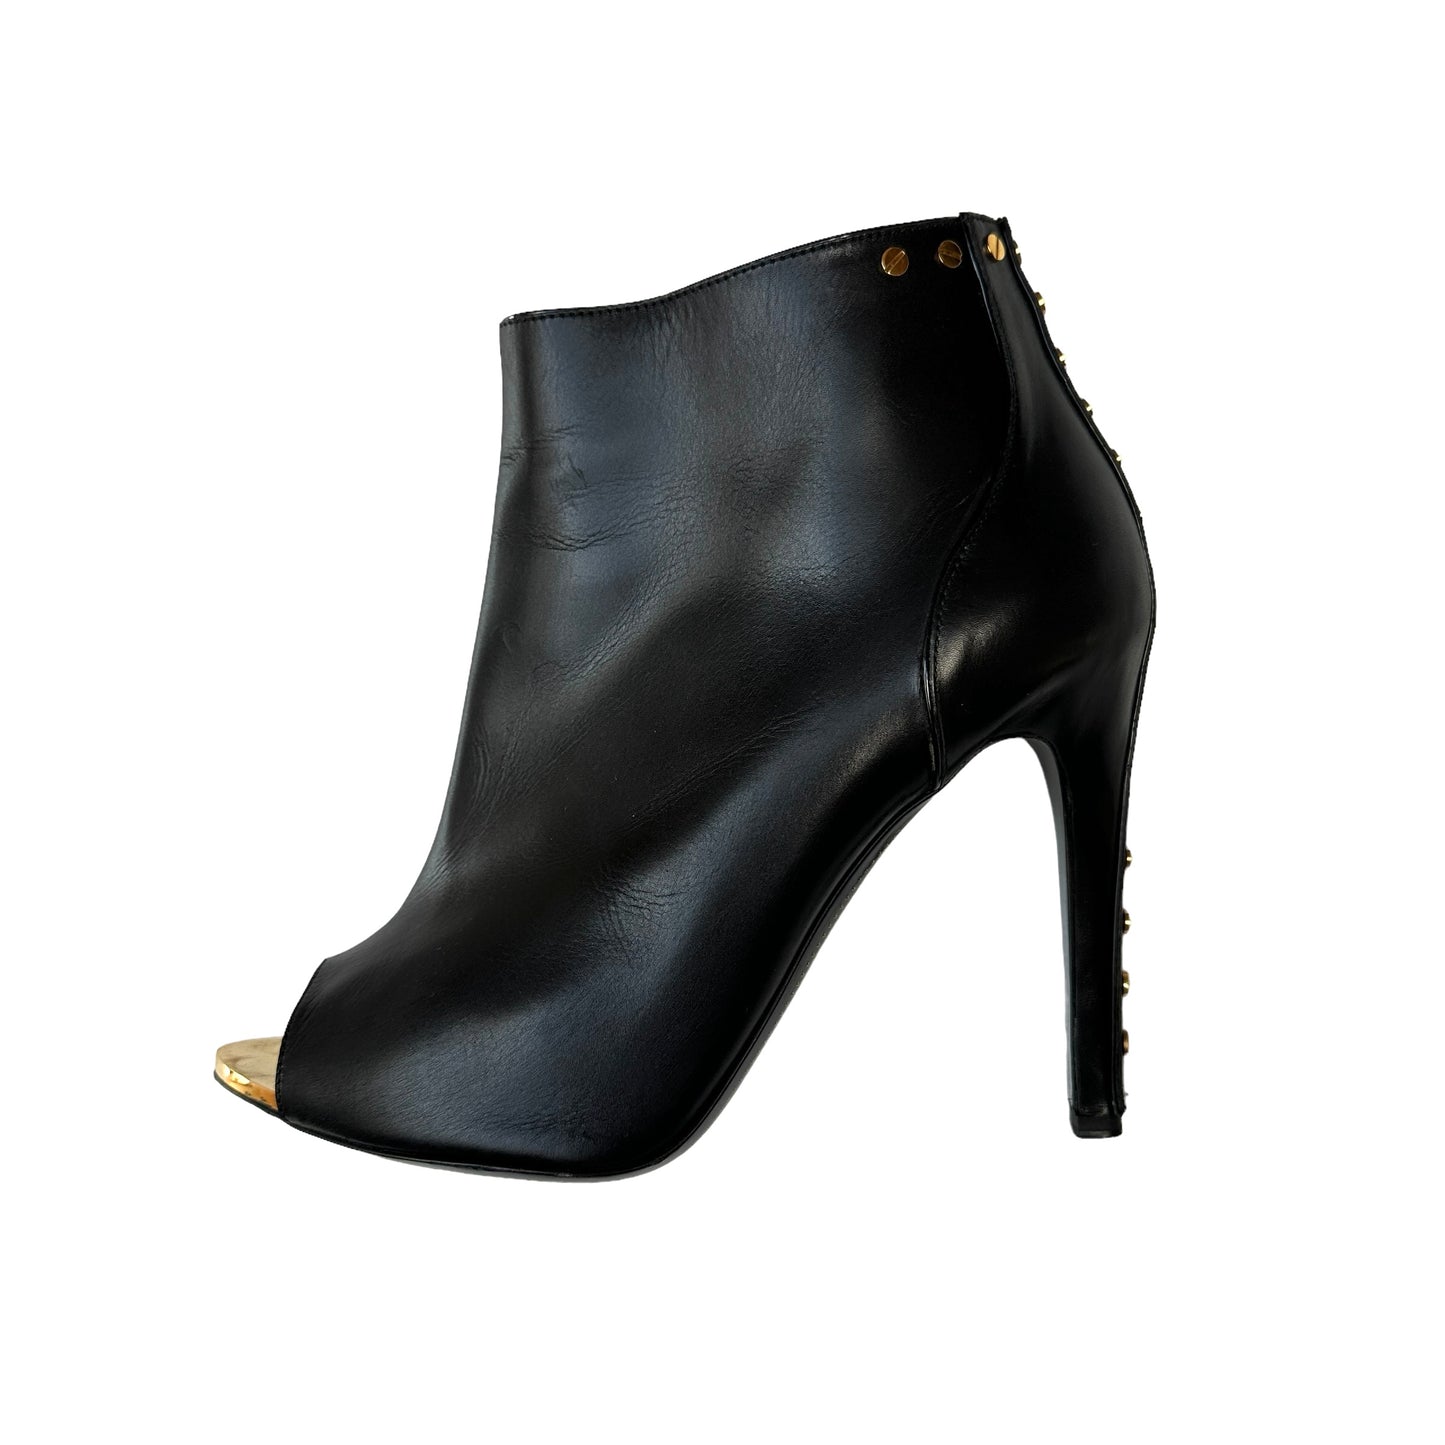 Black & Gold Heels - 8.5